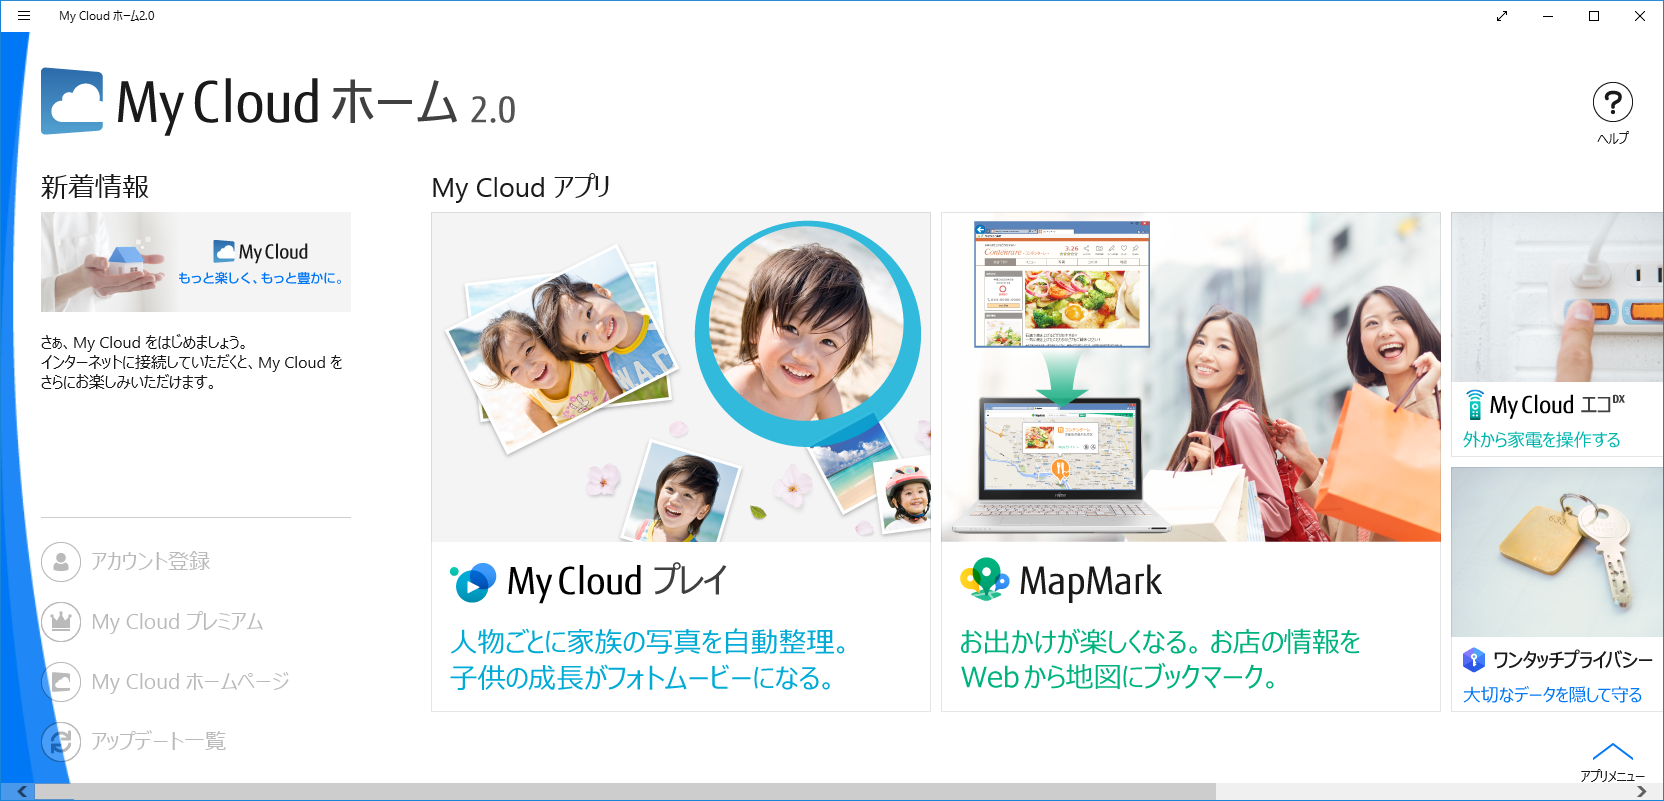 My Cloud サービス